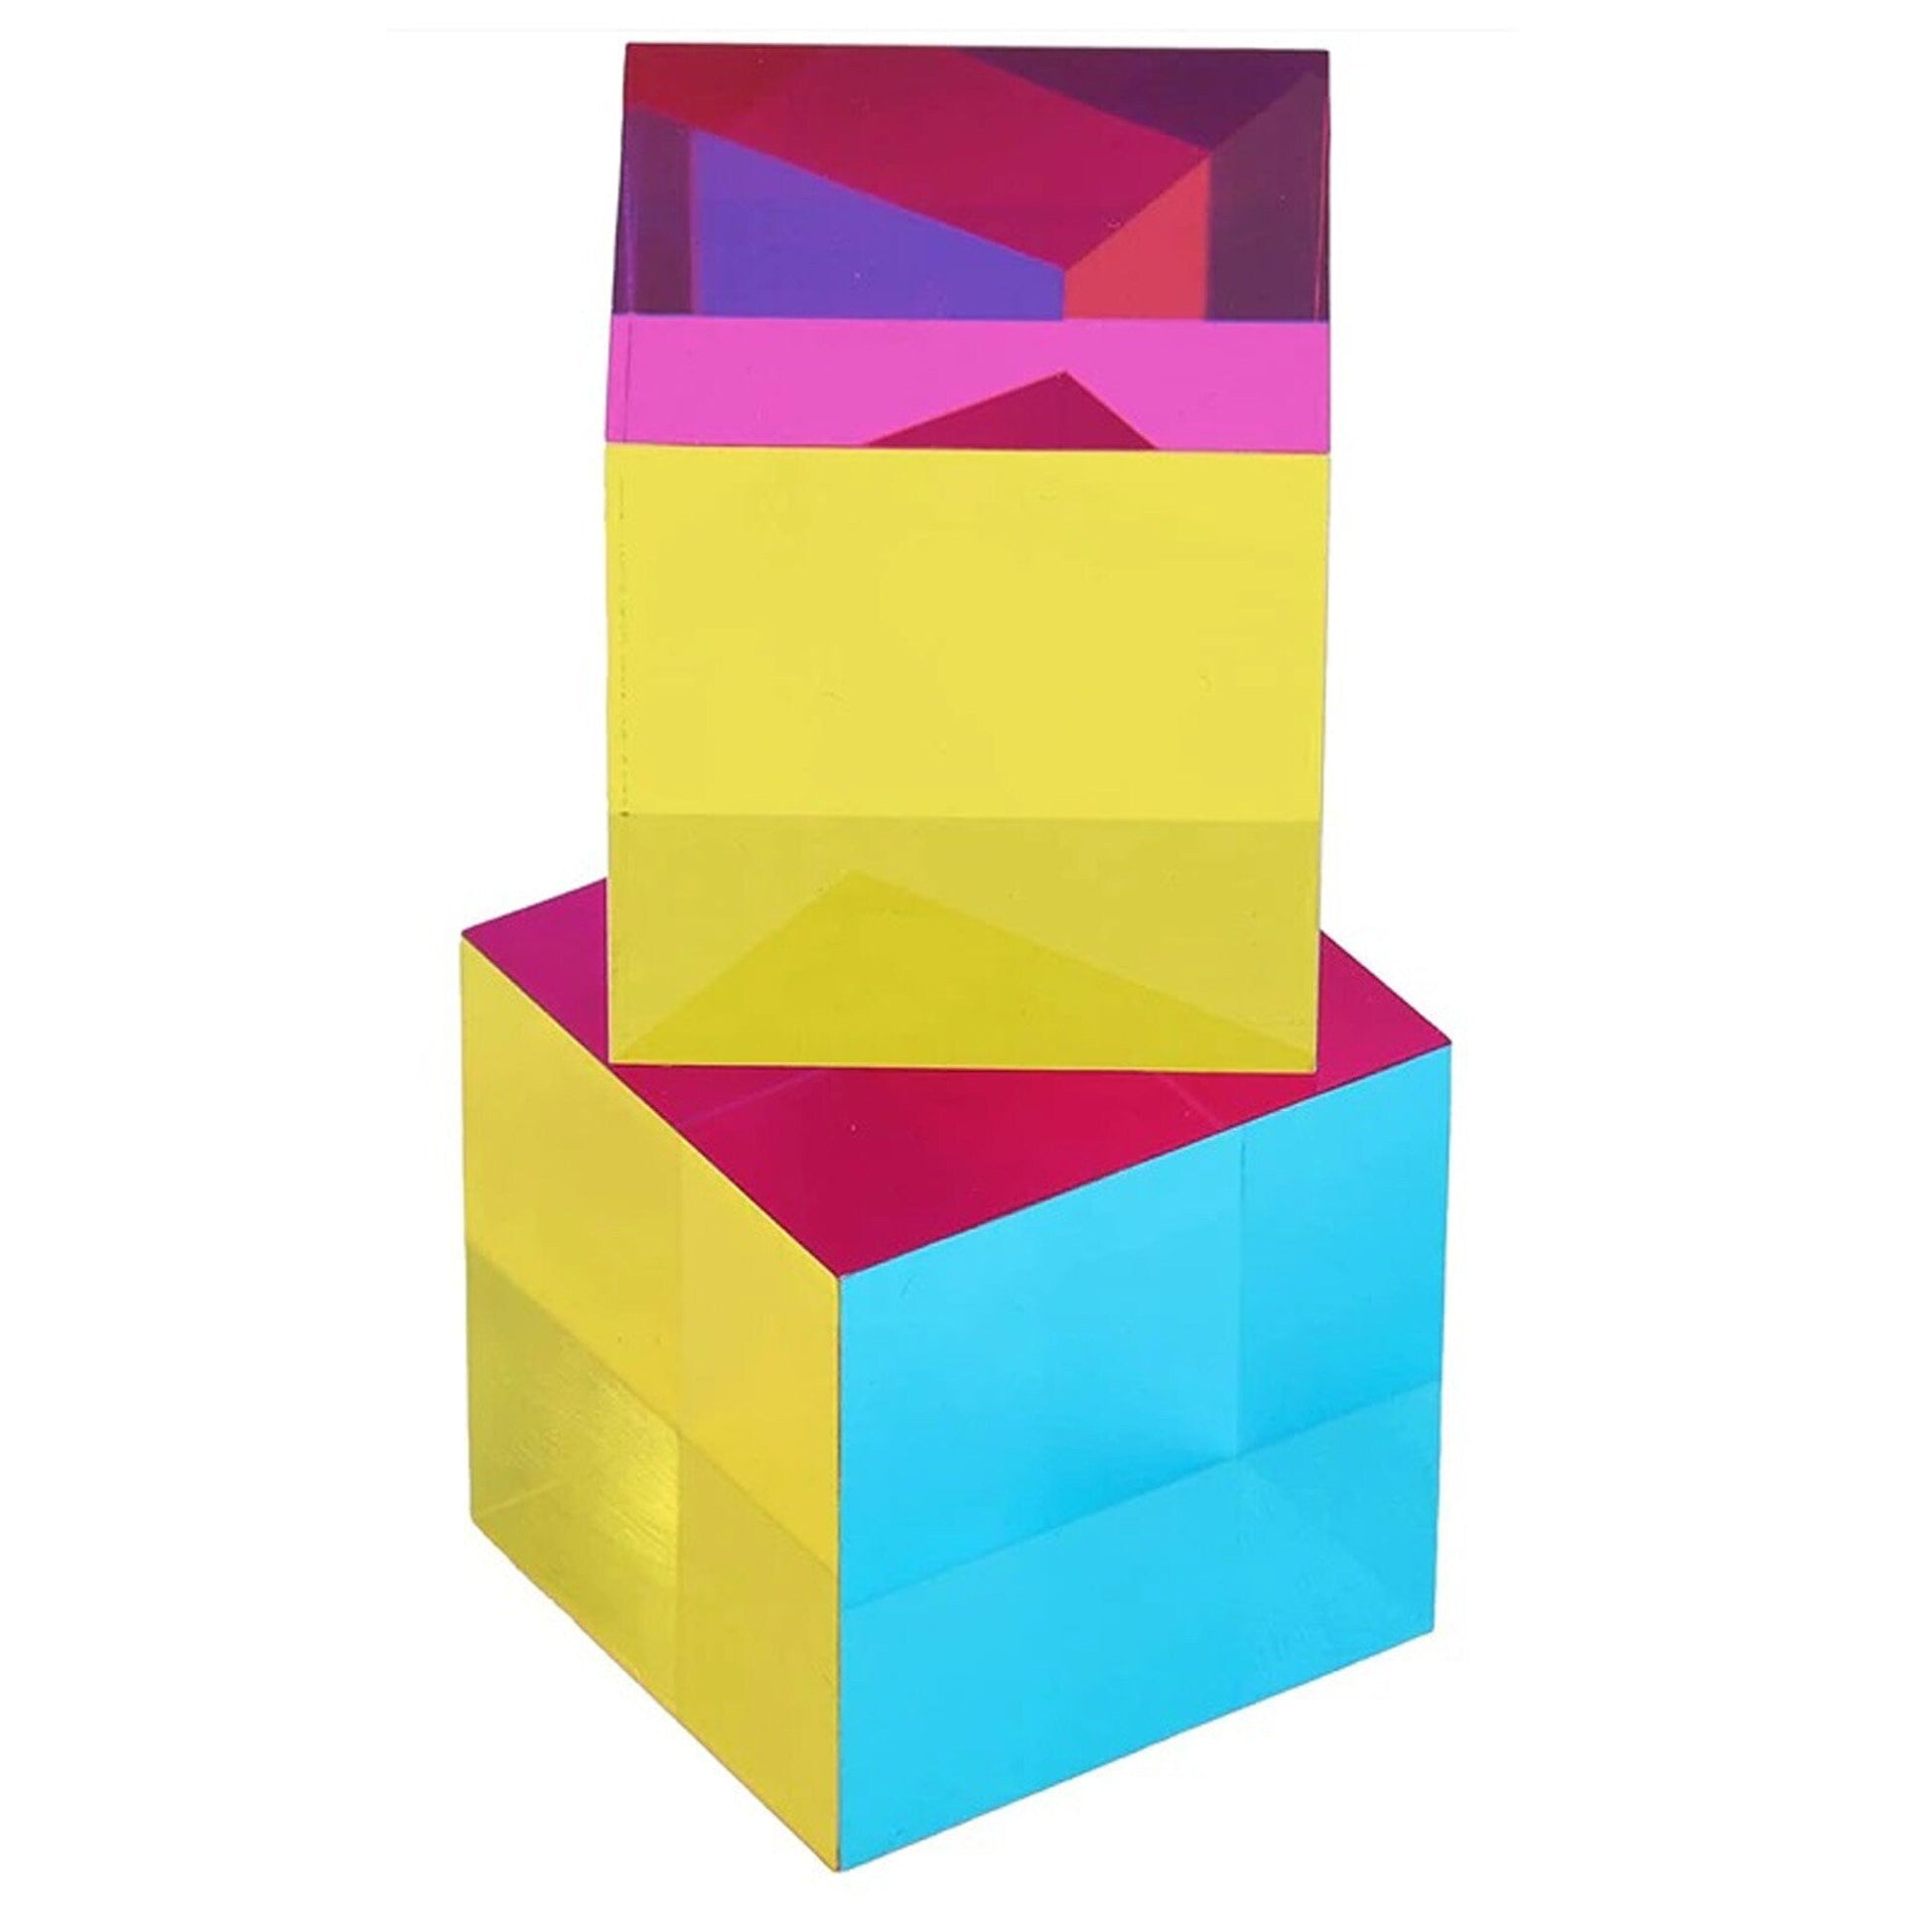 Beautiful Multi Colored Crystal Cube - City2CityWorld